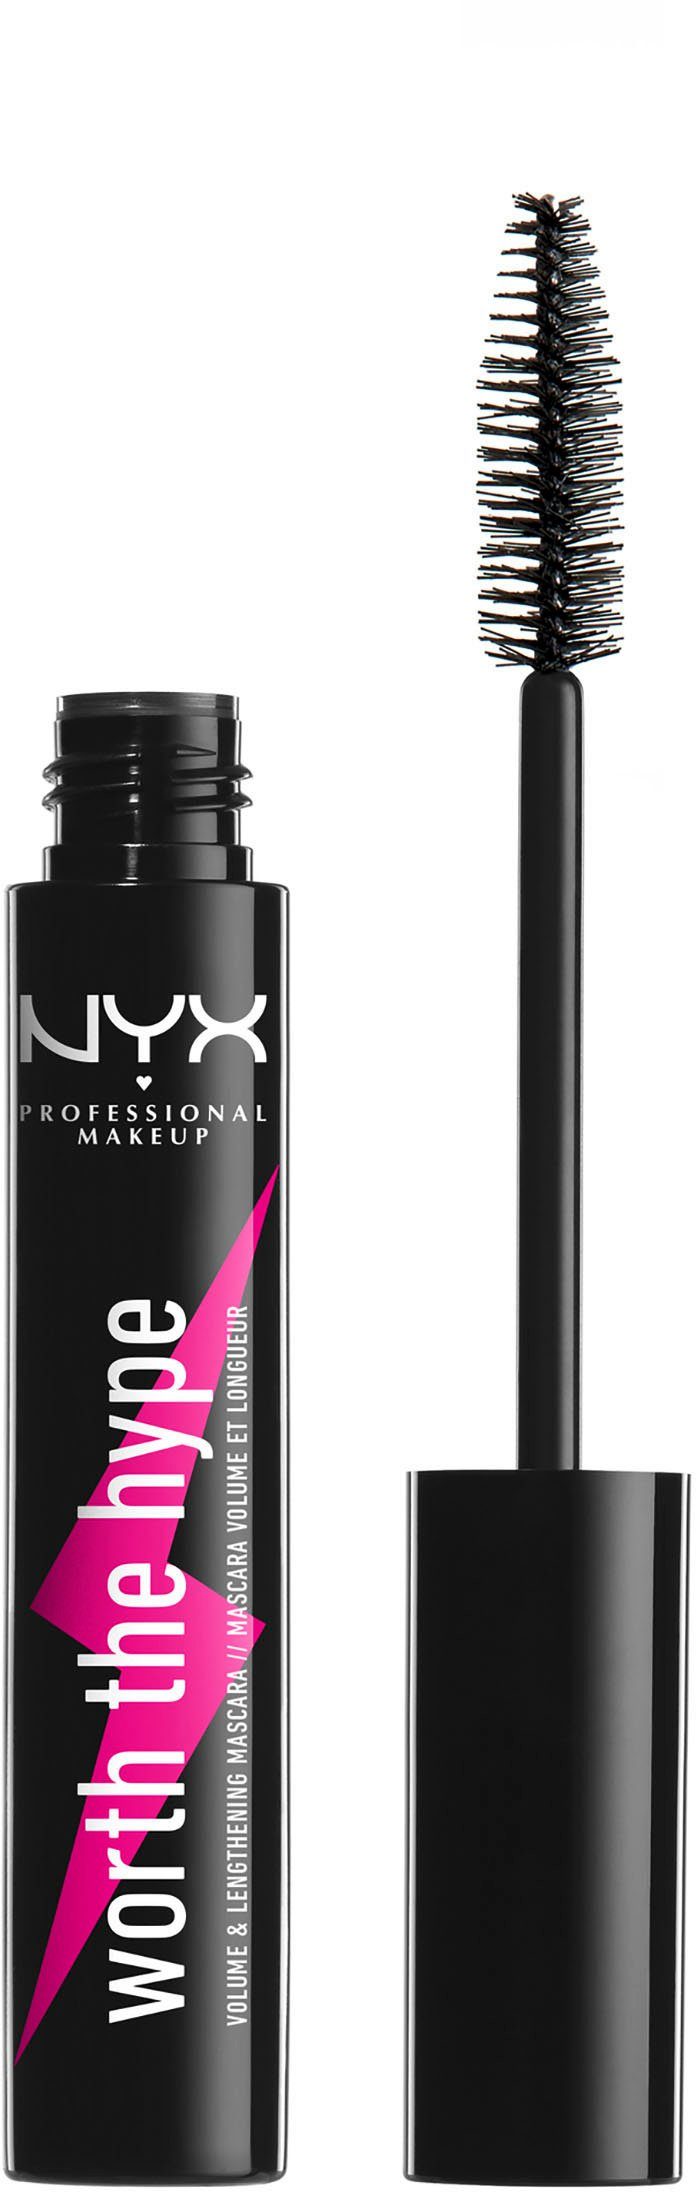 Makeup NYX Professional Worth The Mascara Mascara Hype